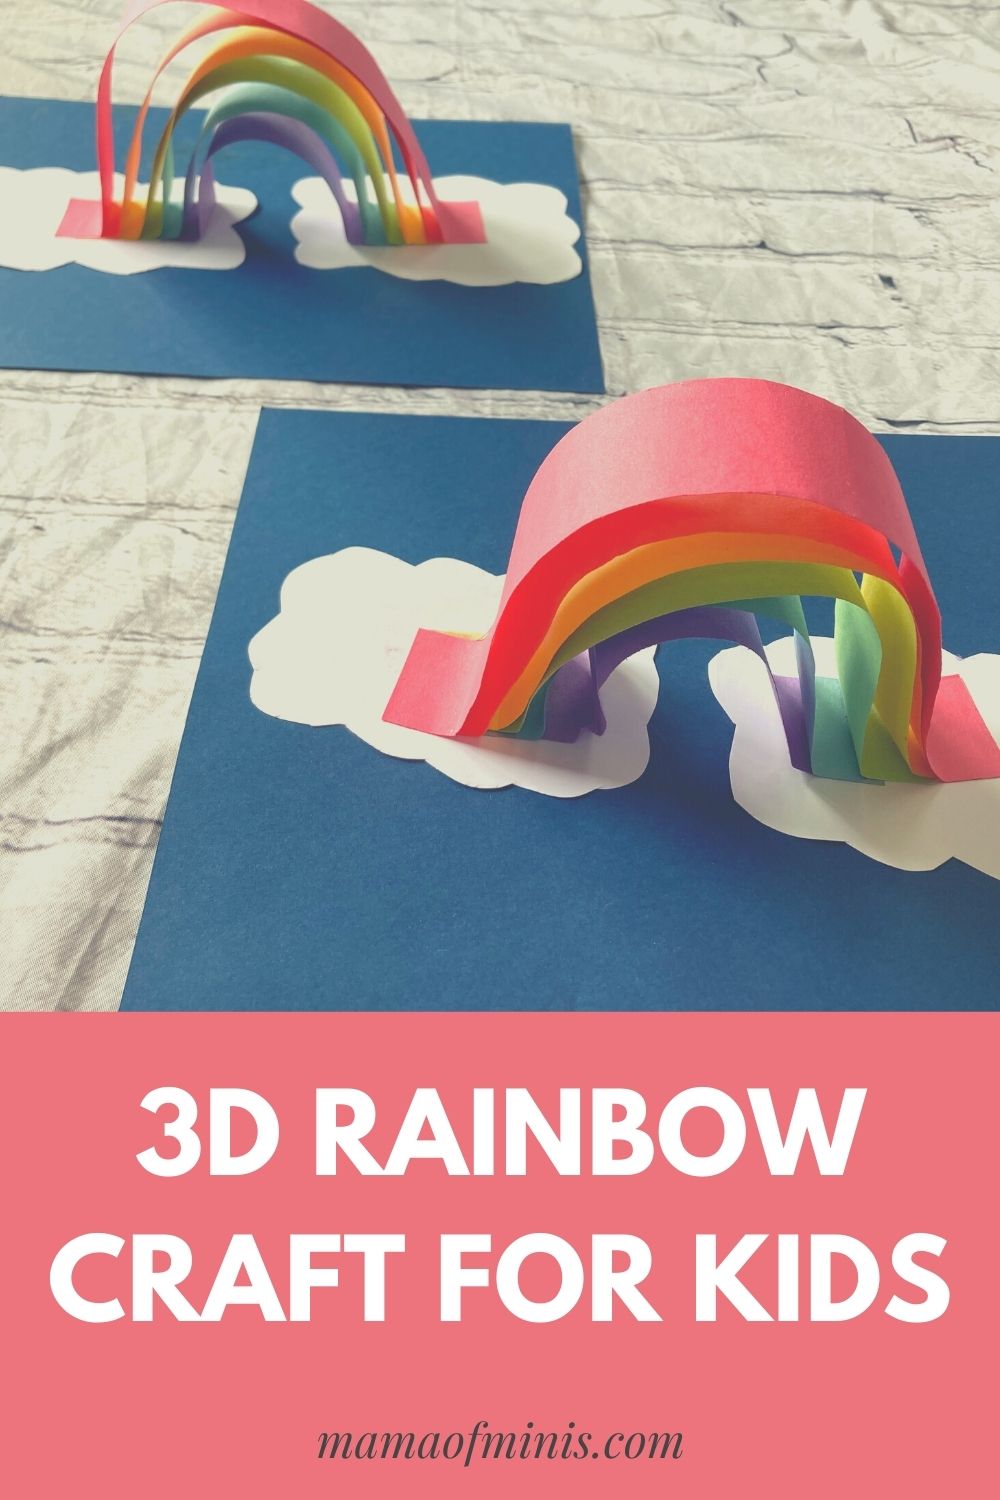 3D Rainbow Craft for Kids 